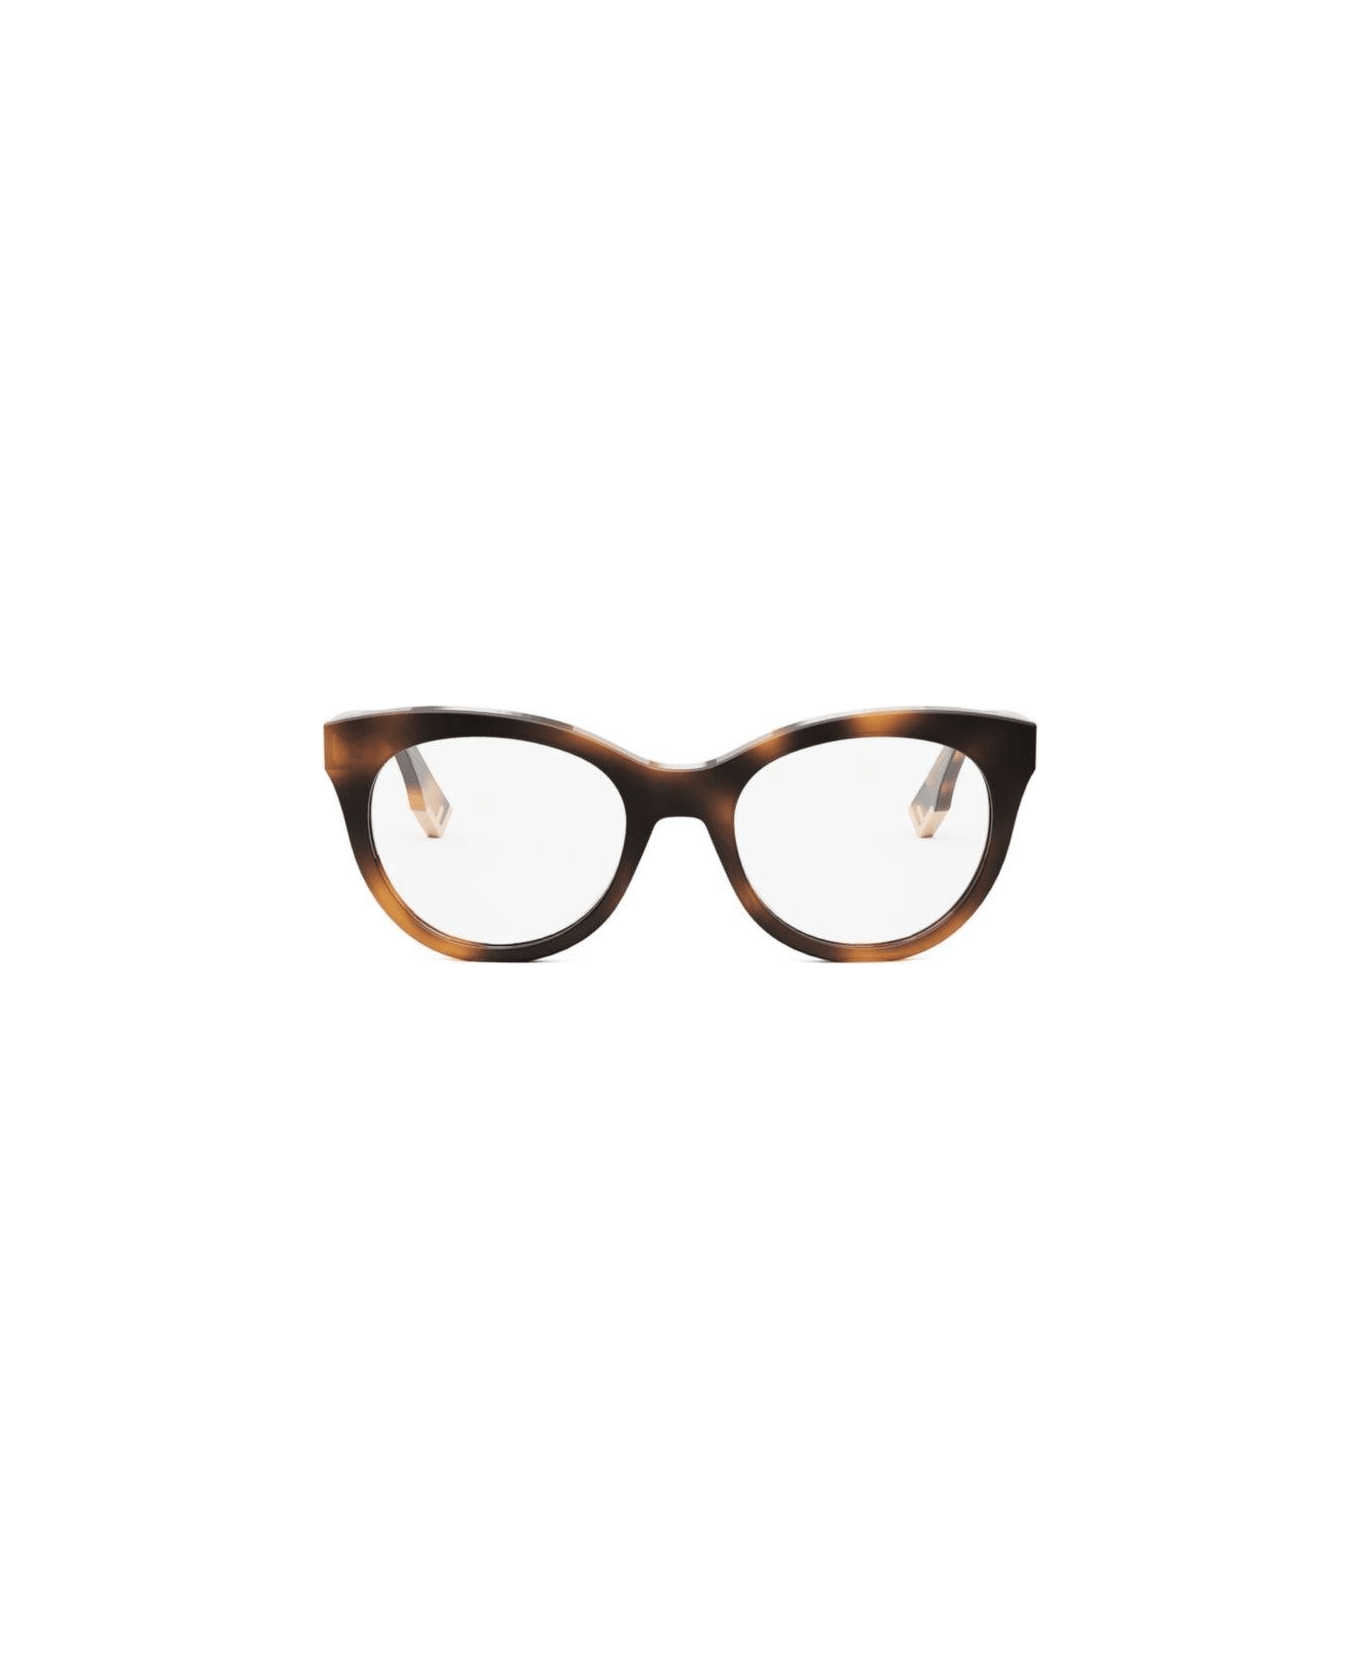 Fendi Eyewear Cat-eye Frame Glasses - 053